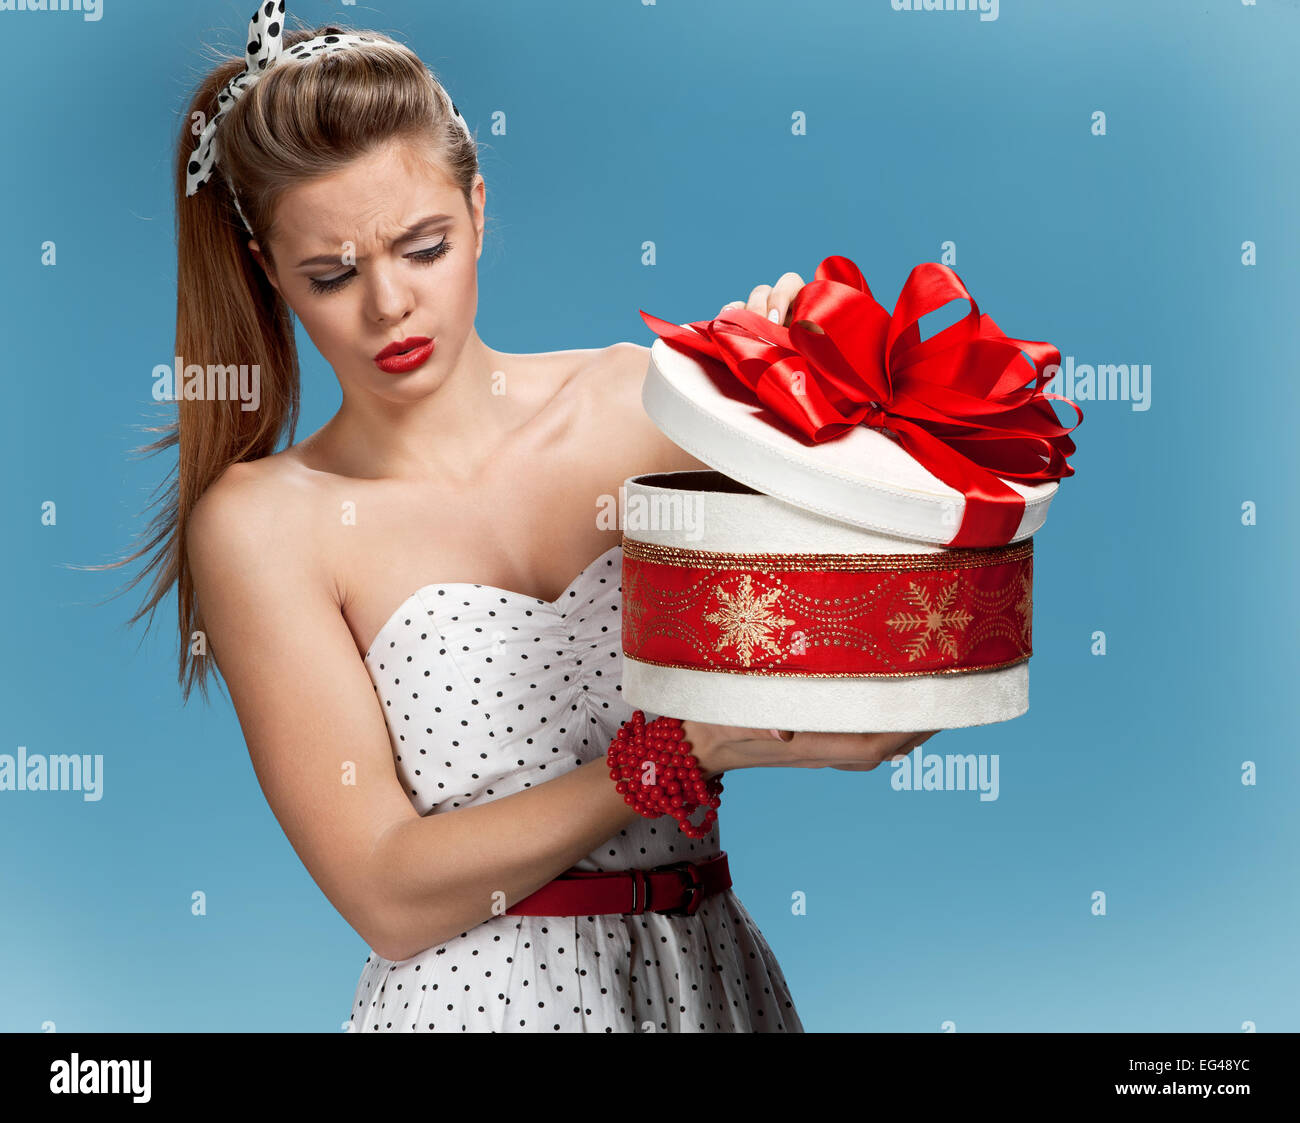 Suspicious girl opening gift box Stock Photo